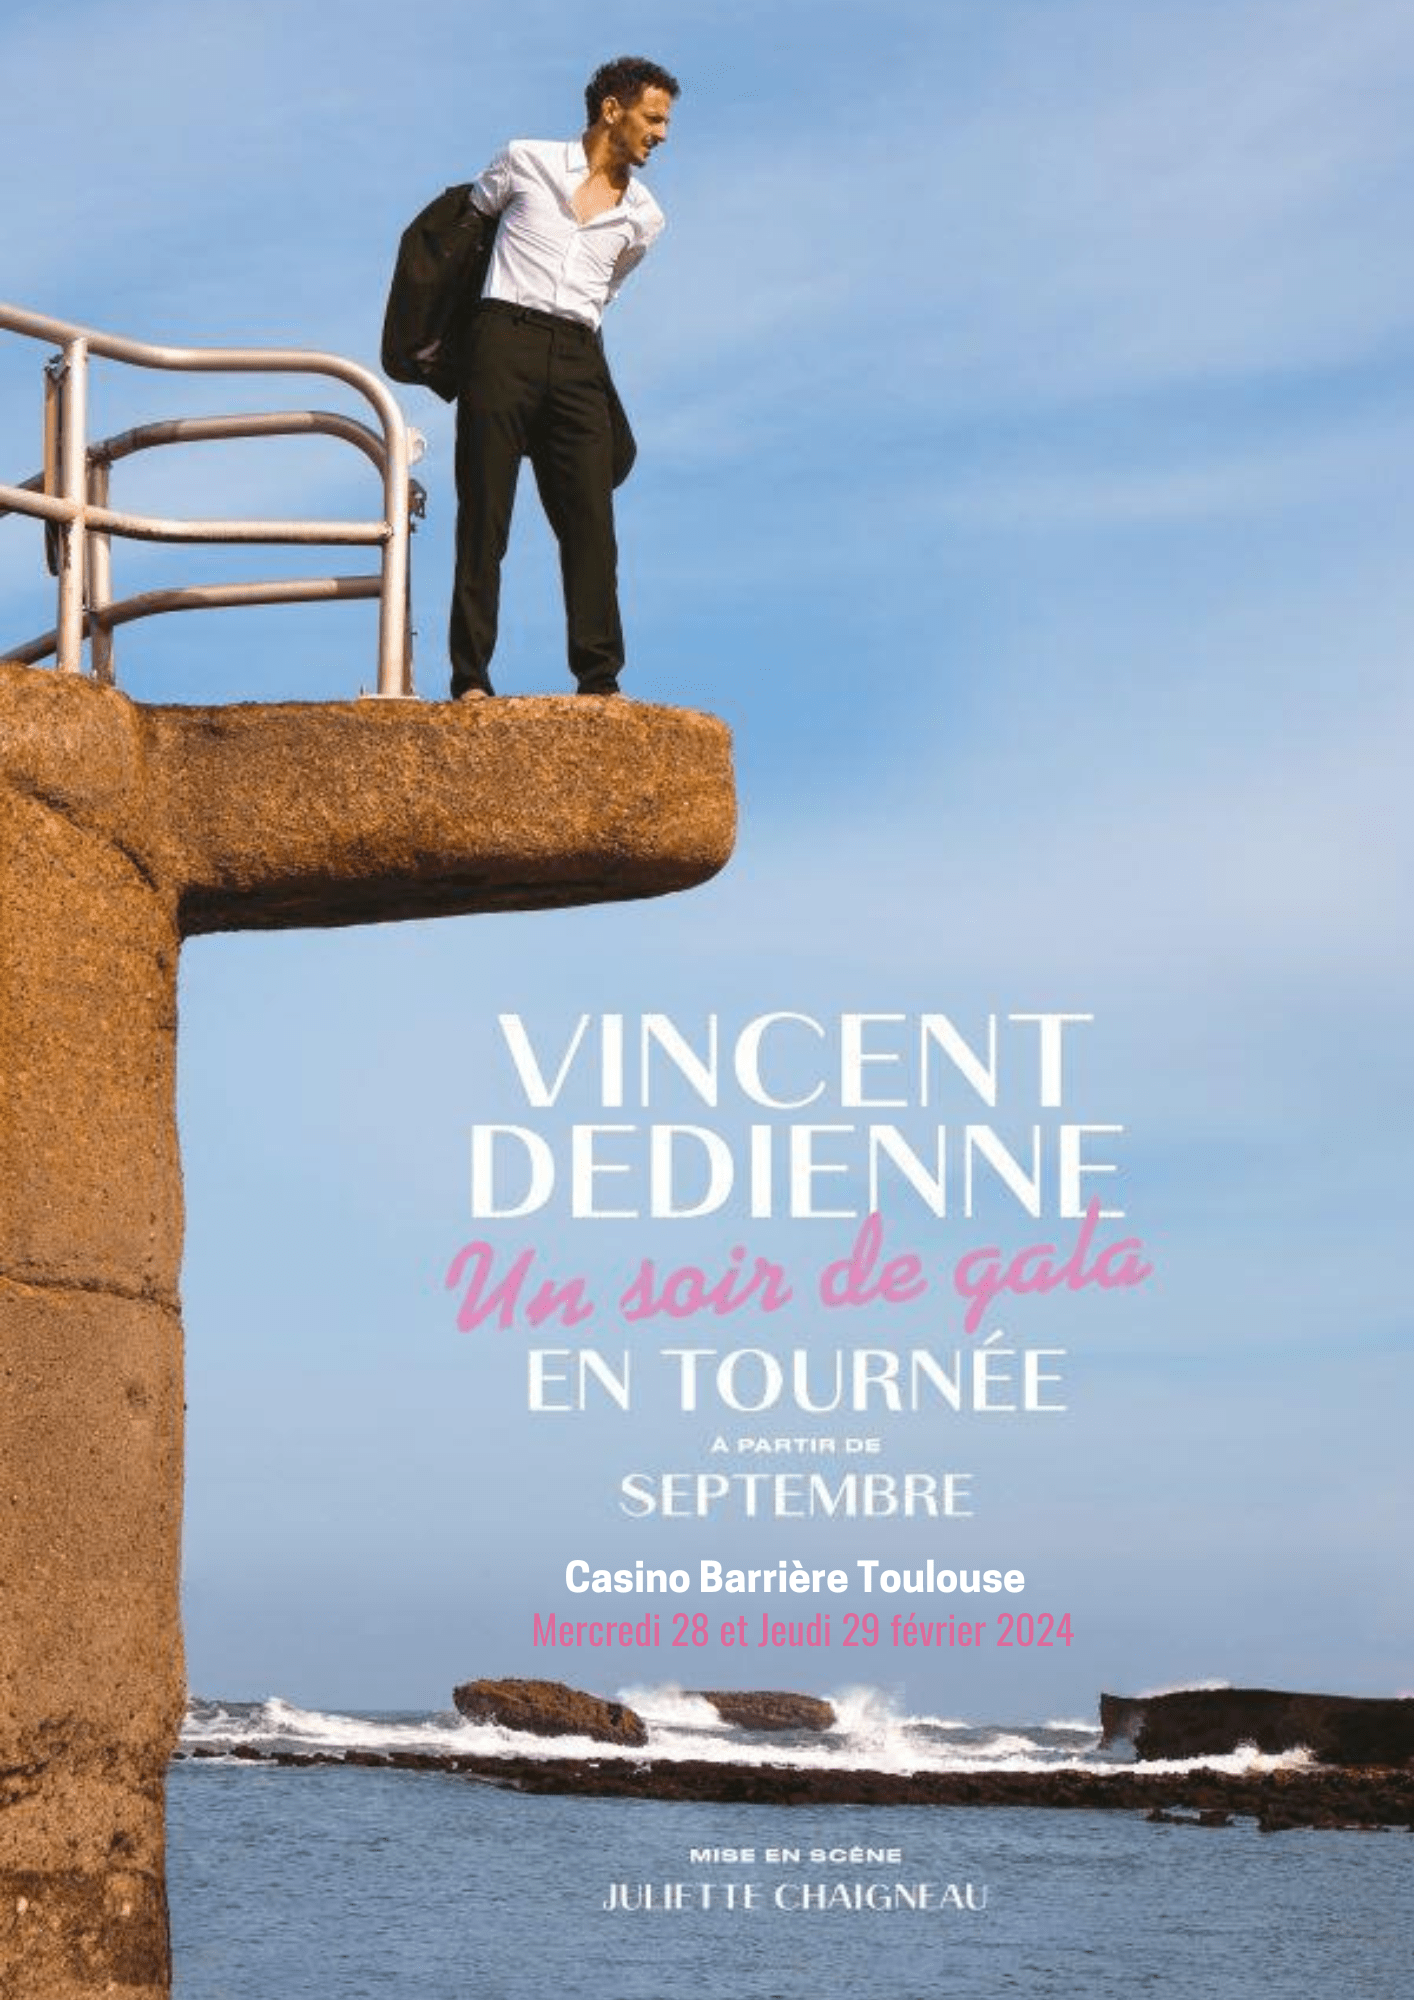 Vincent Dedienne - Casino